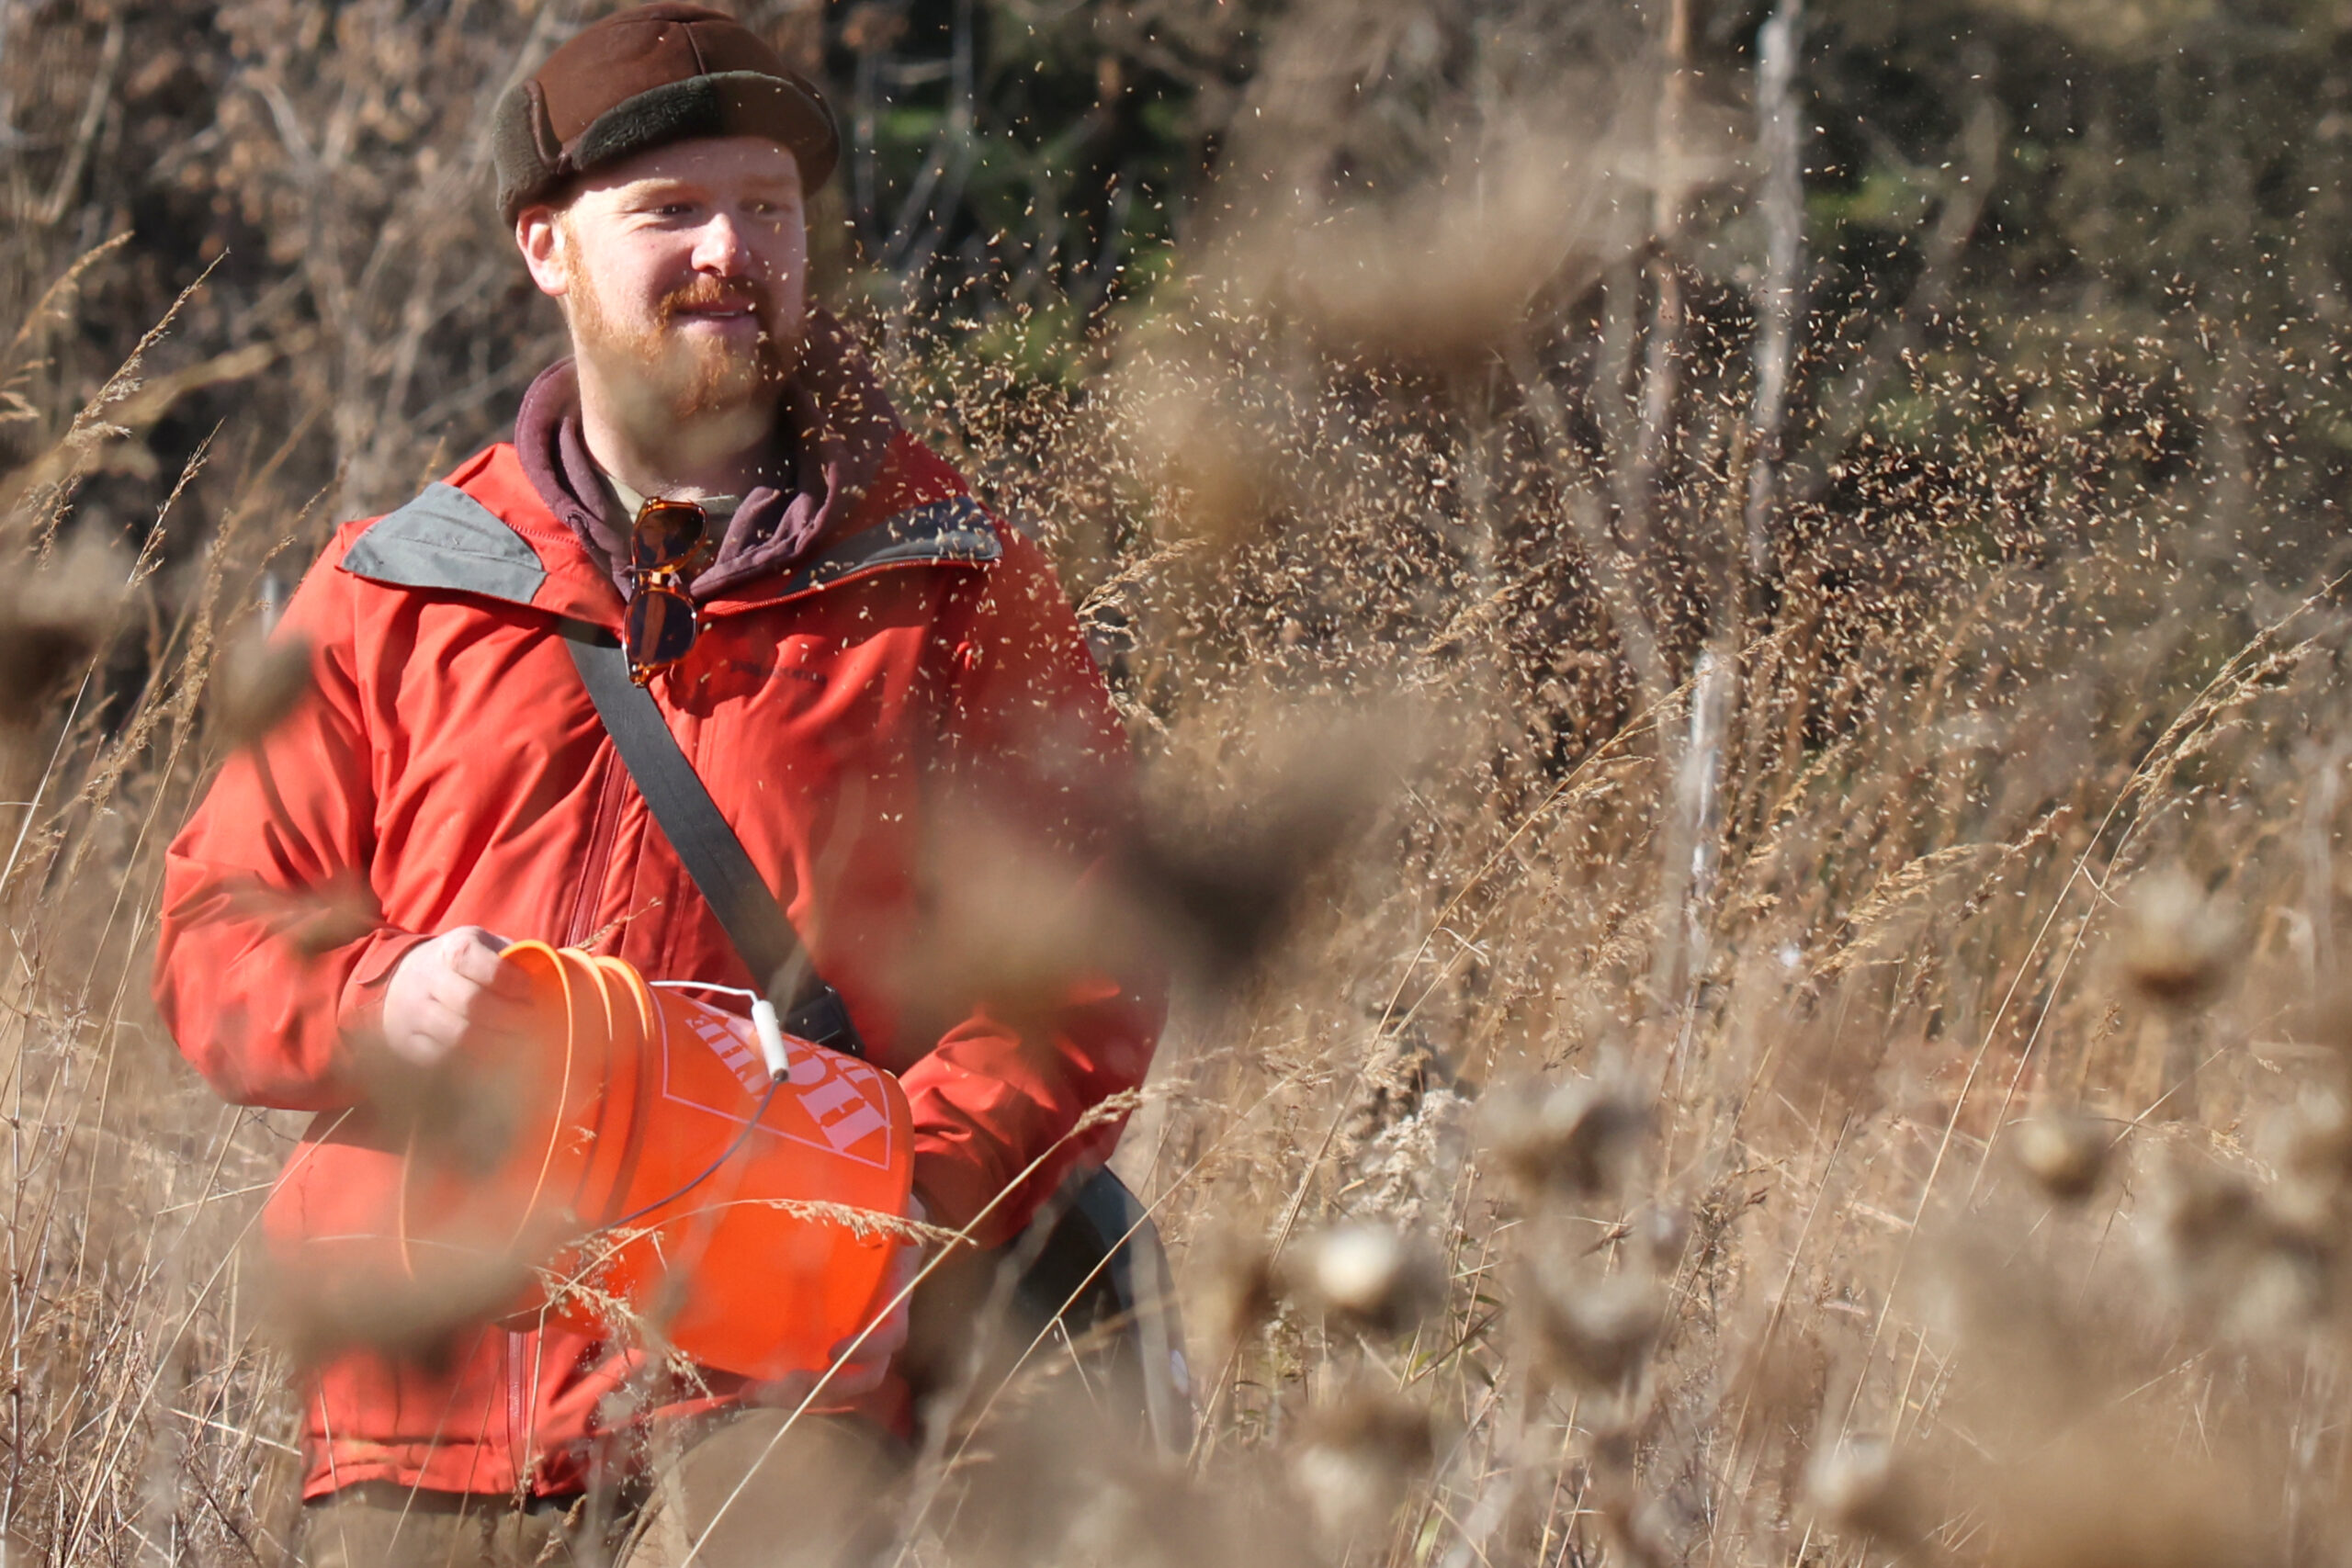 Ryan Godfrey of WWF-Canada hand-casts native grass seeds on a field near Shelburne, Ontario.